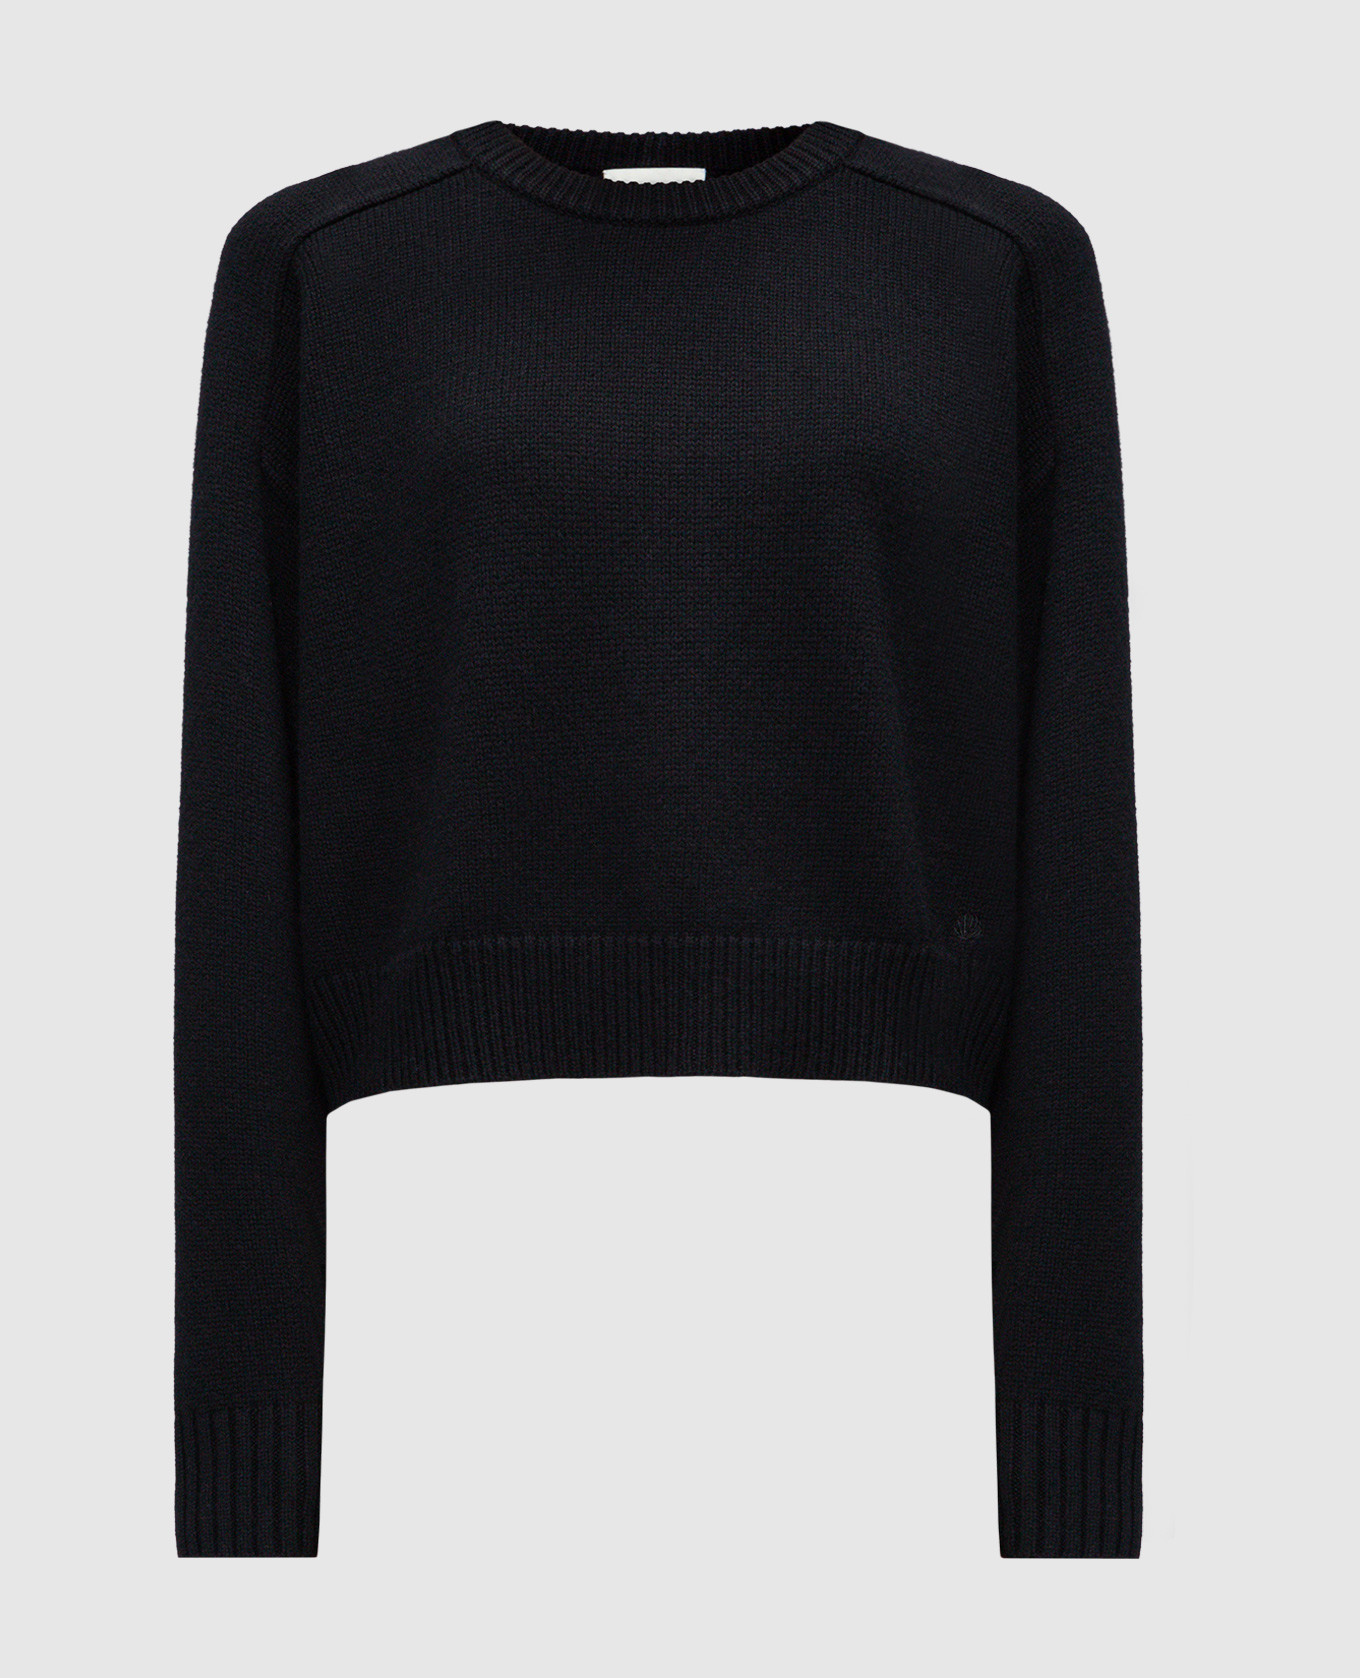 Bruzzi black wool and cashmere sweater